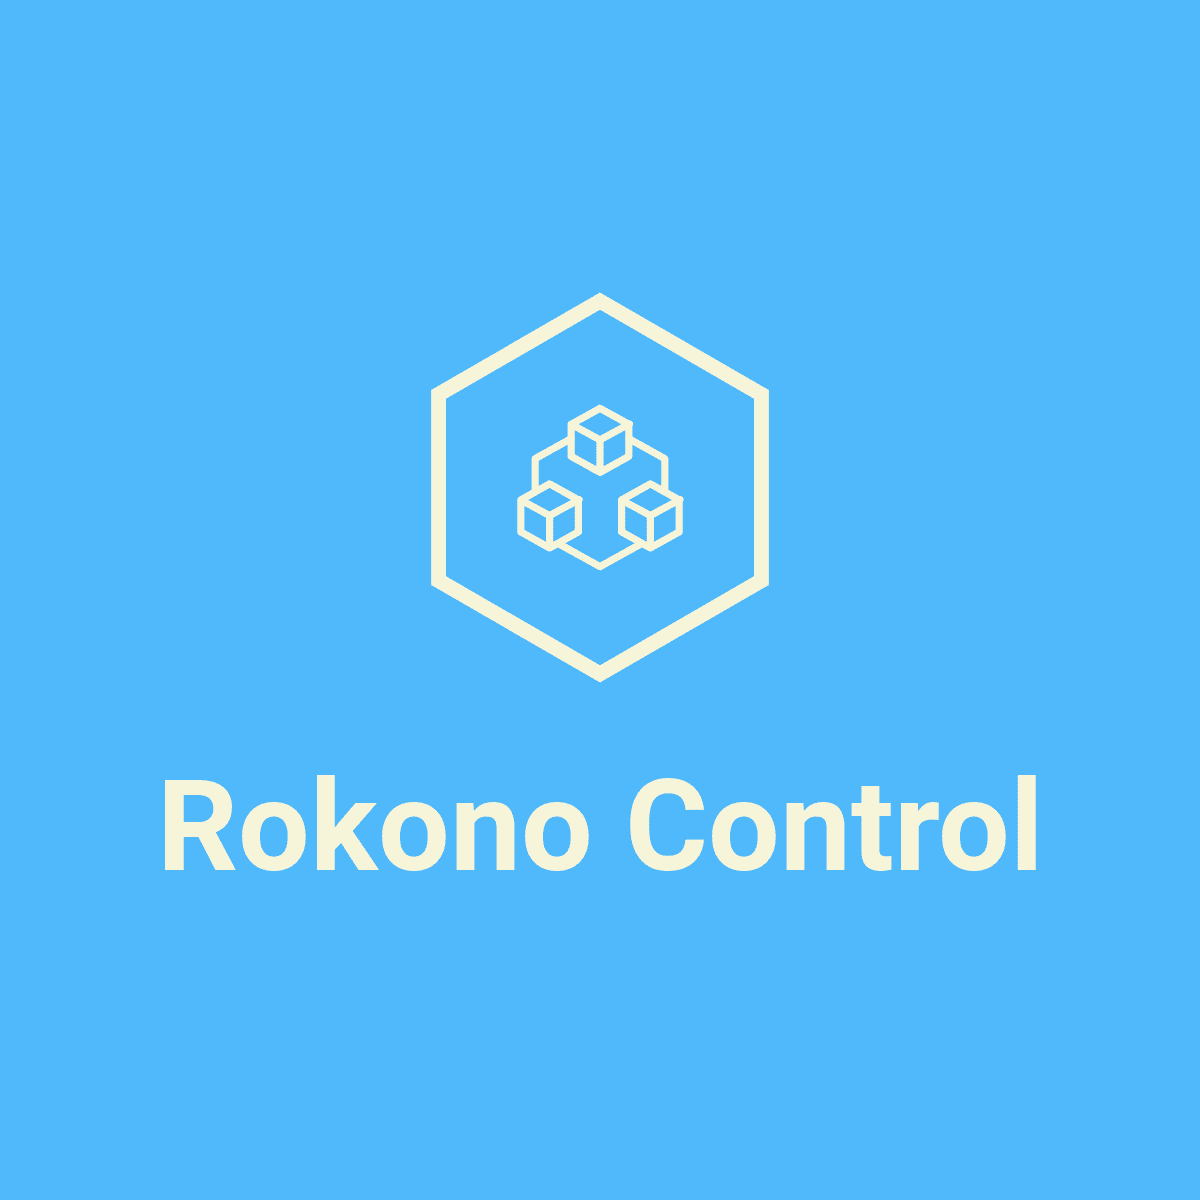 RokonoControl logo